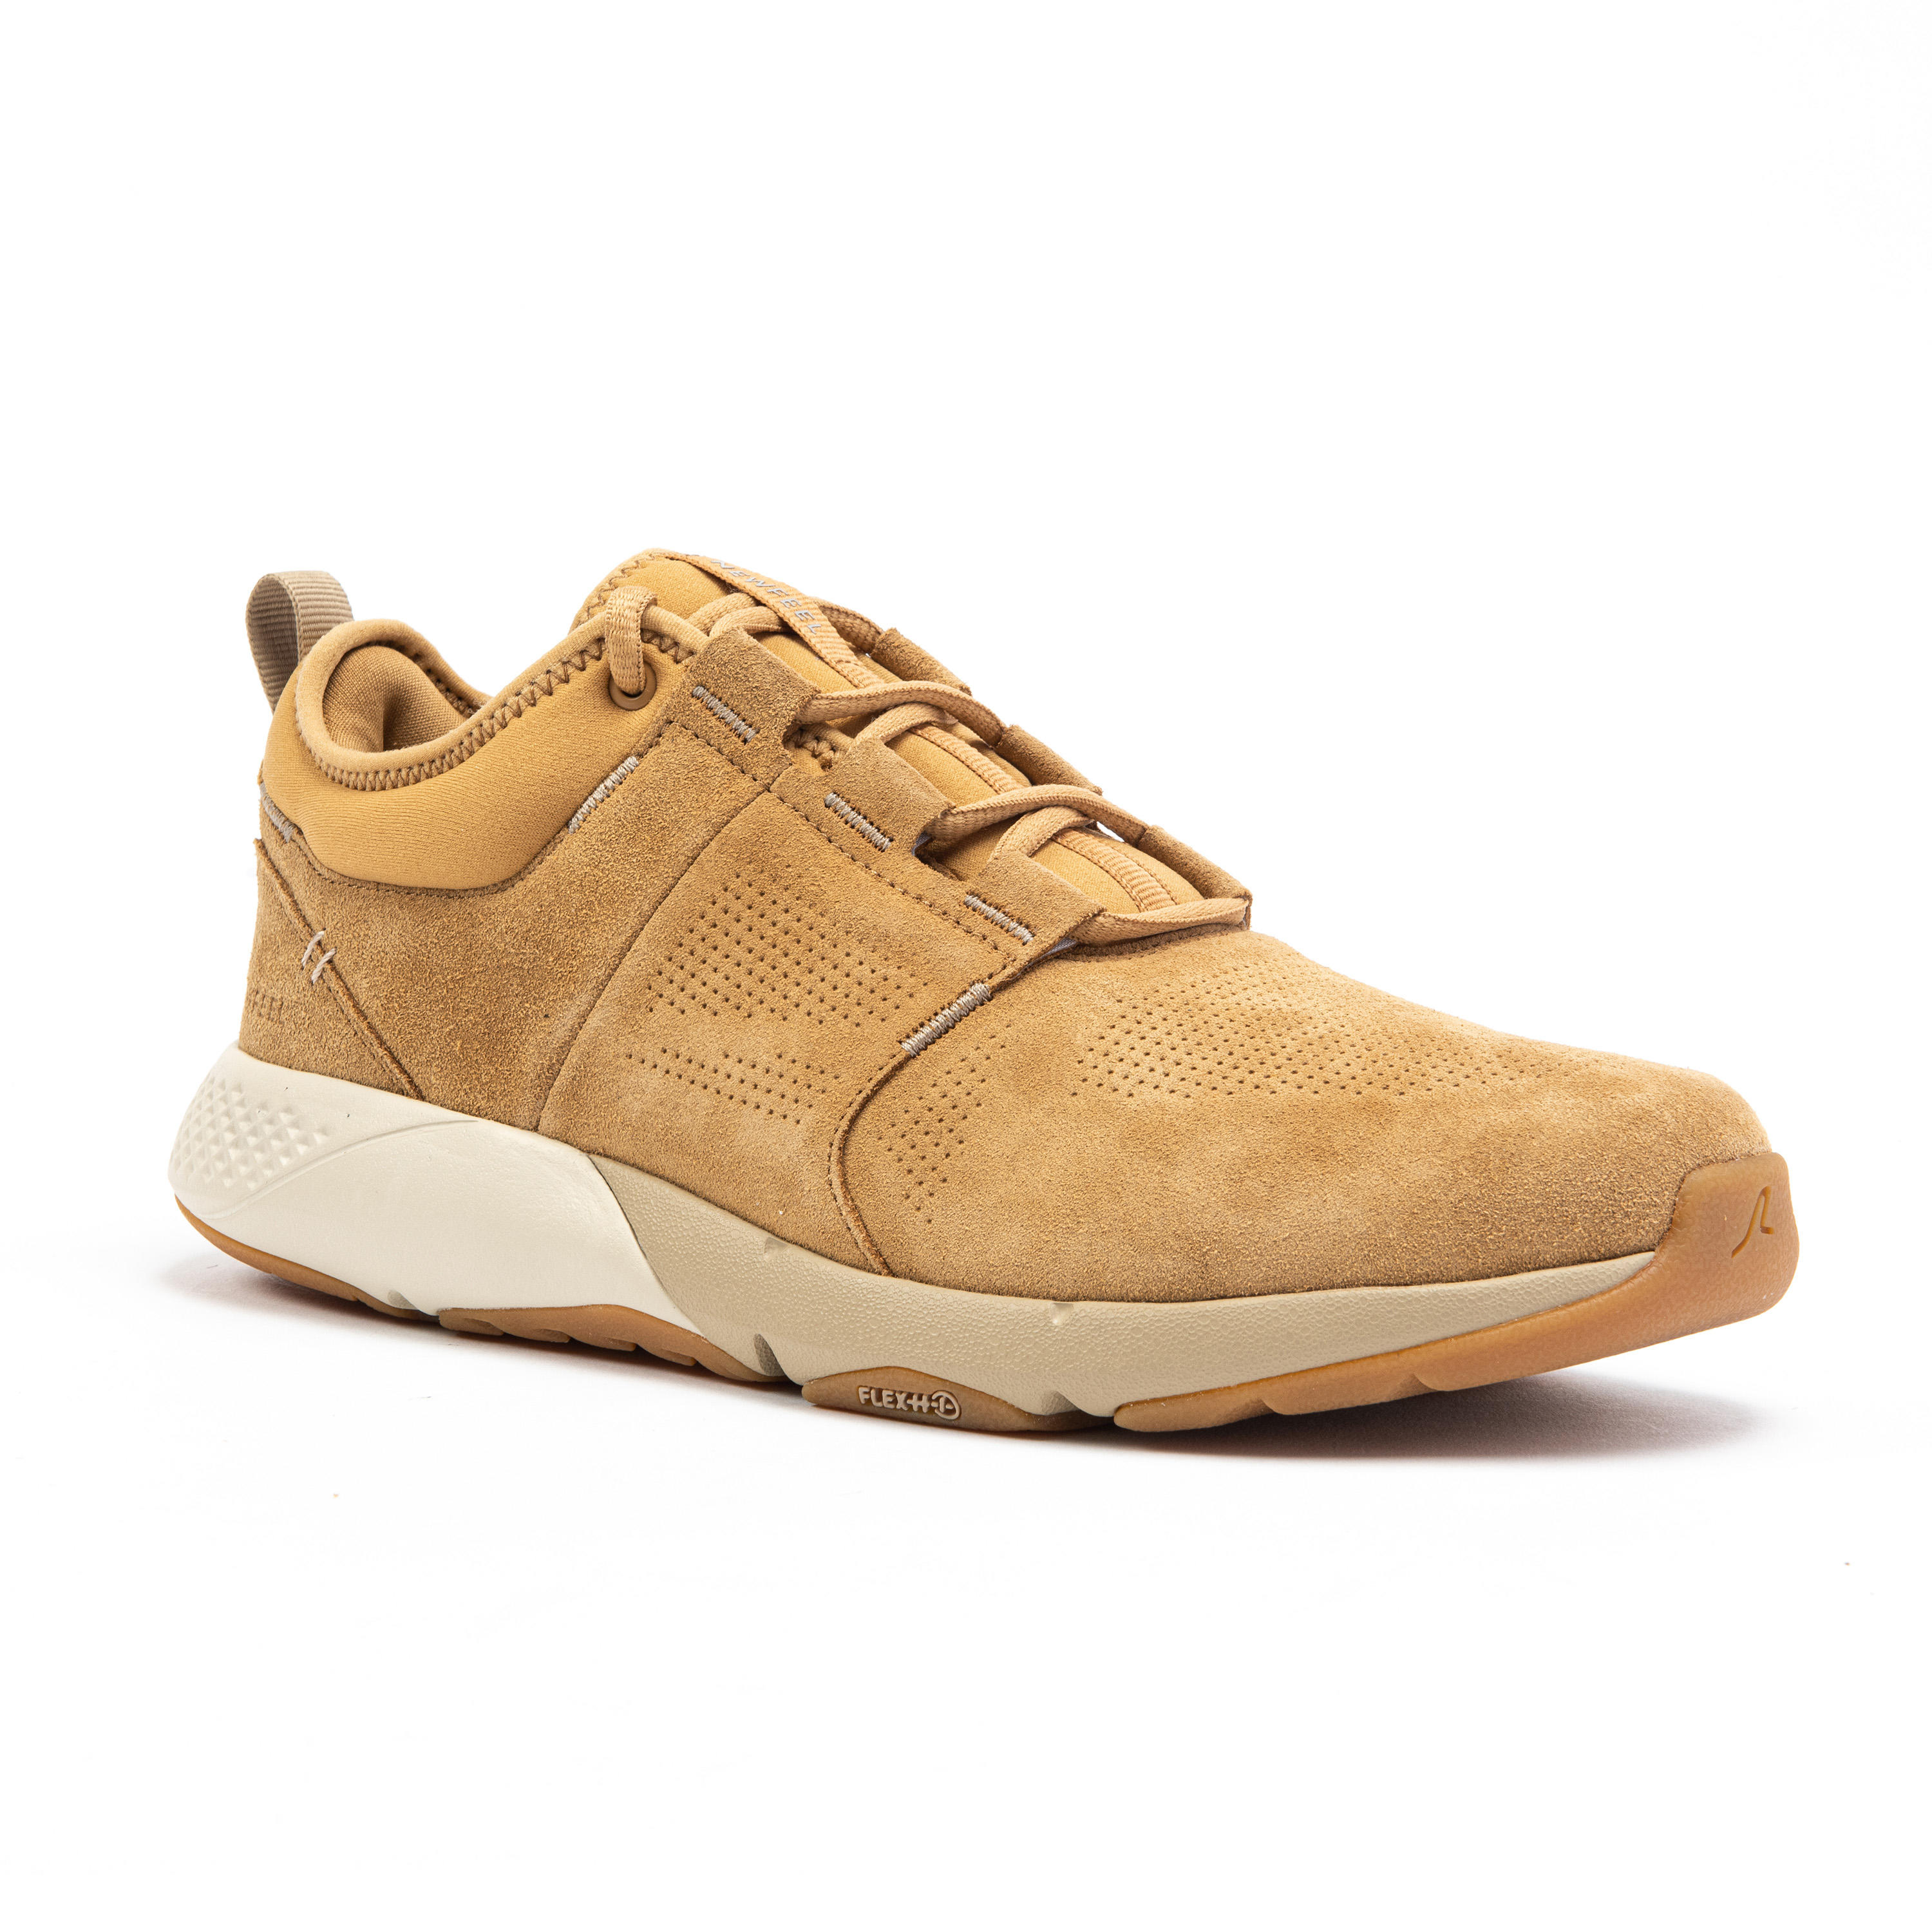 Actiwalk Comfort Leather Men's Urban Walking Shoes - Camel 29/43